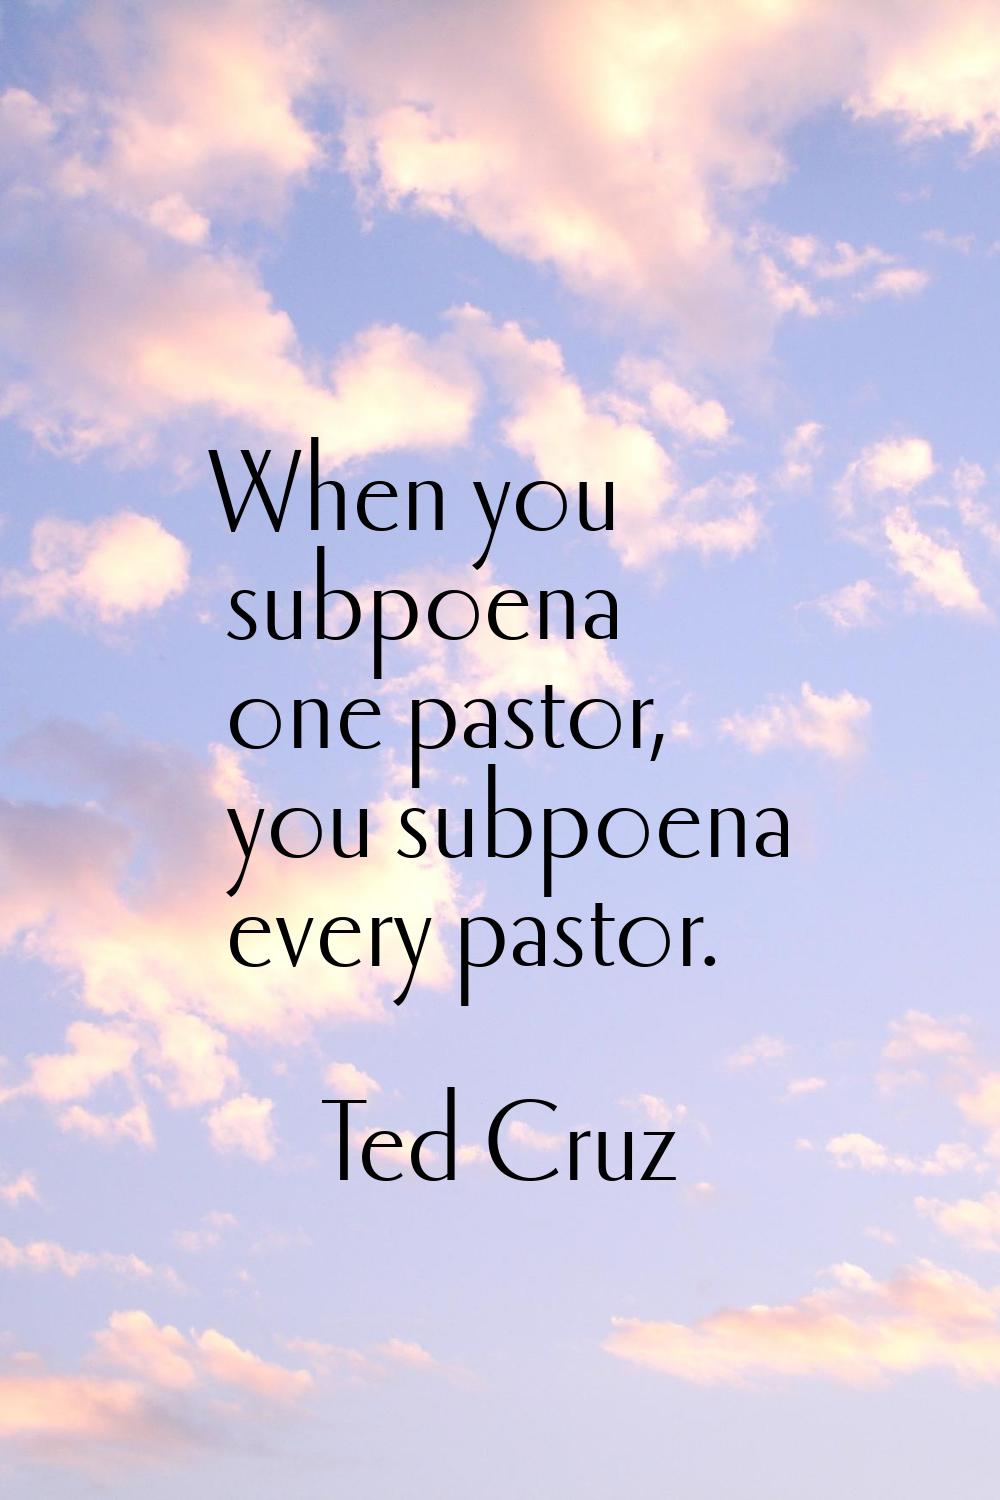 When you subpoena one pastor, you subpoena every pastor.